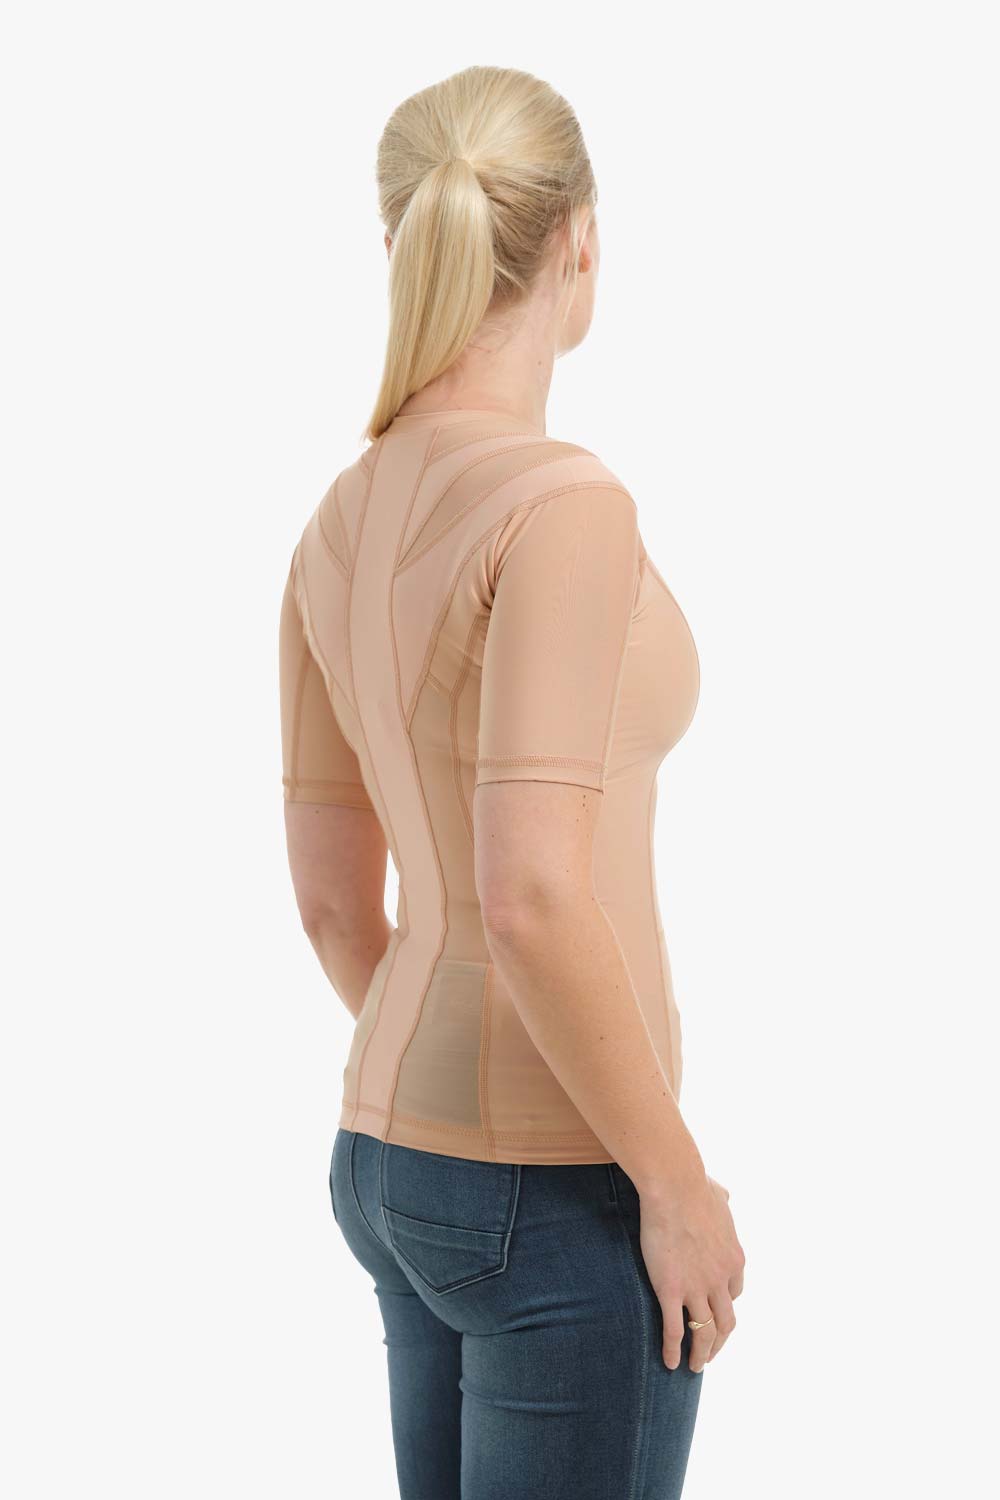 Women's Posture Shirt™ - White